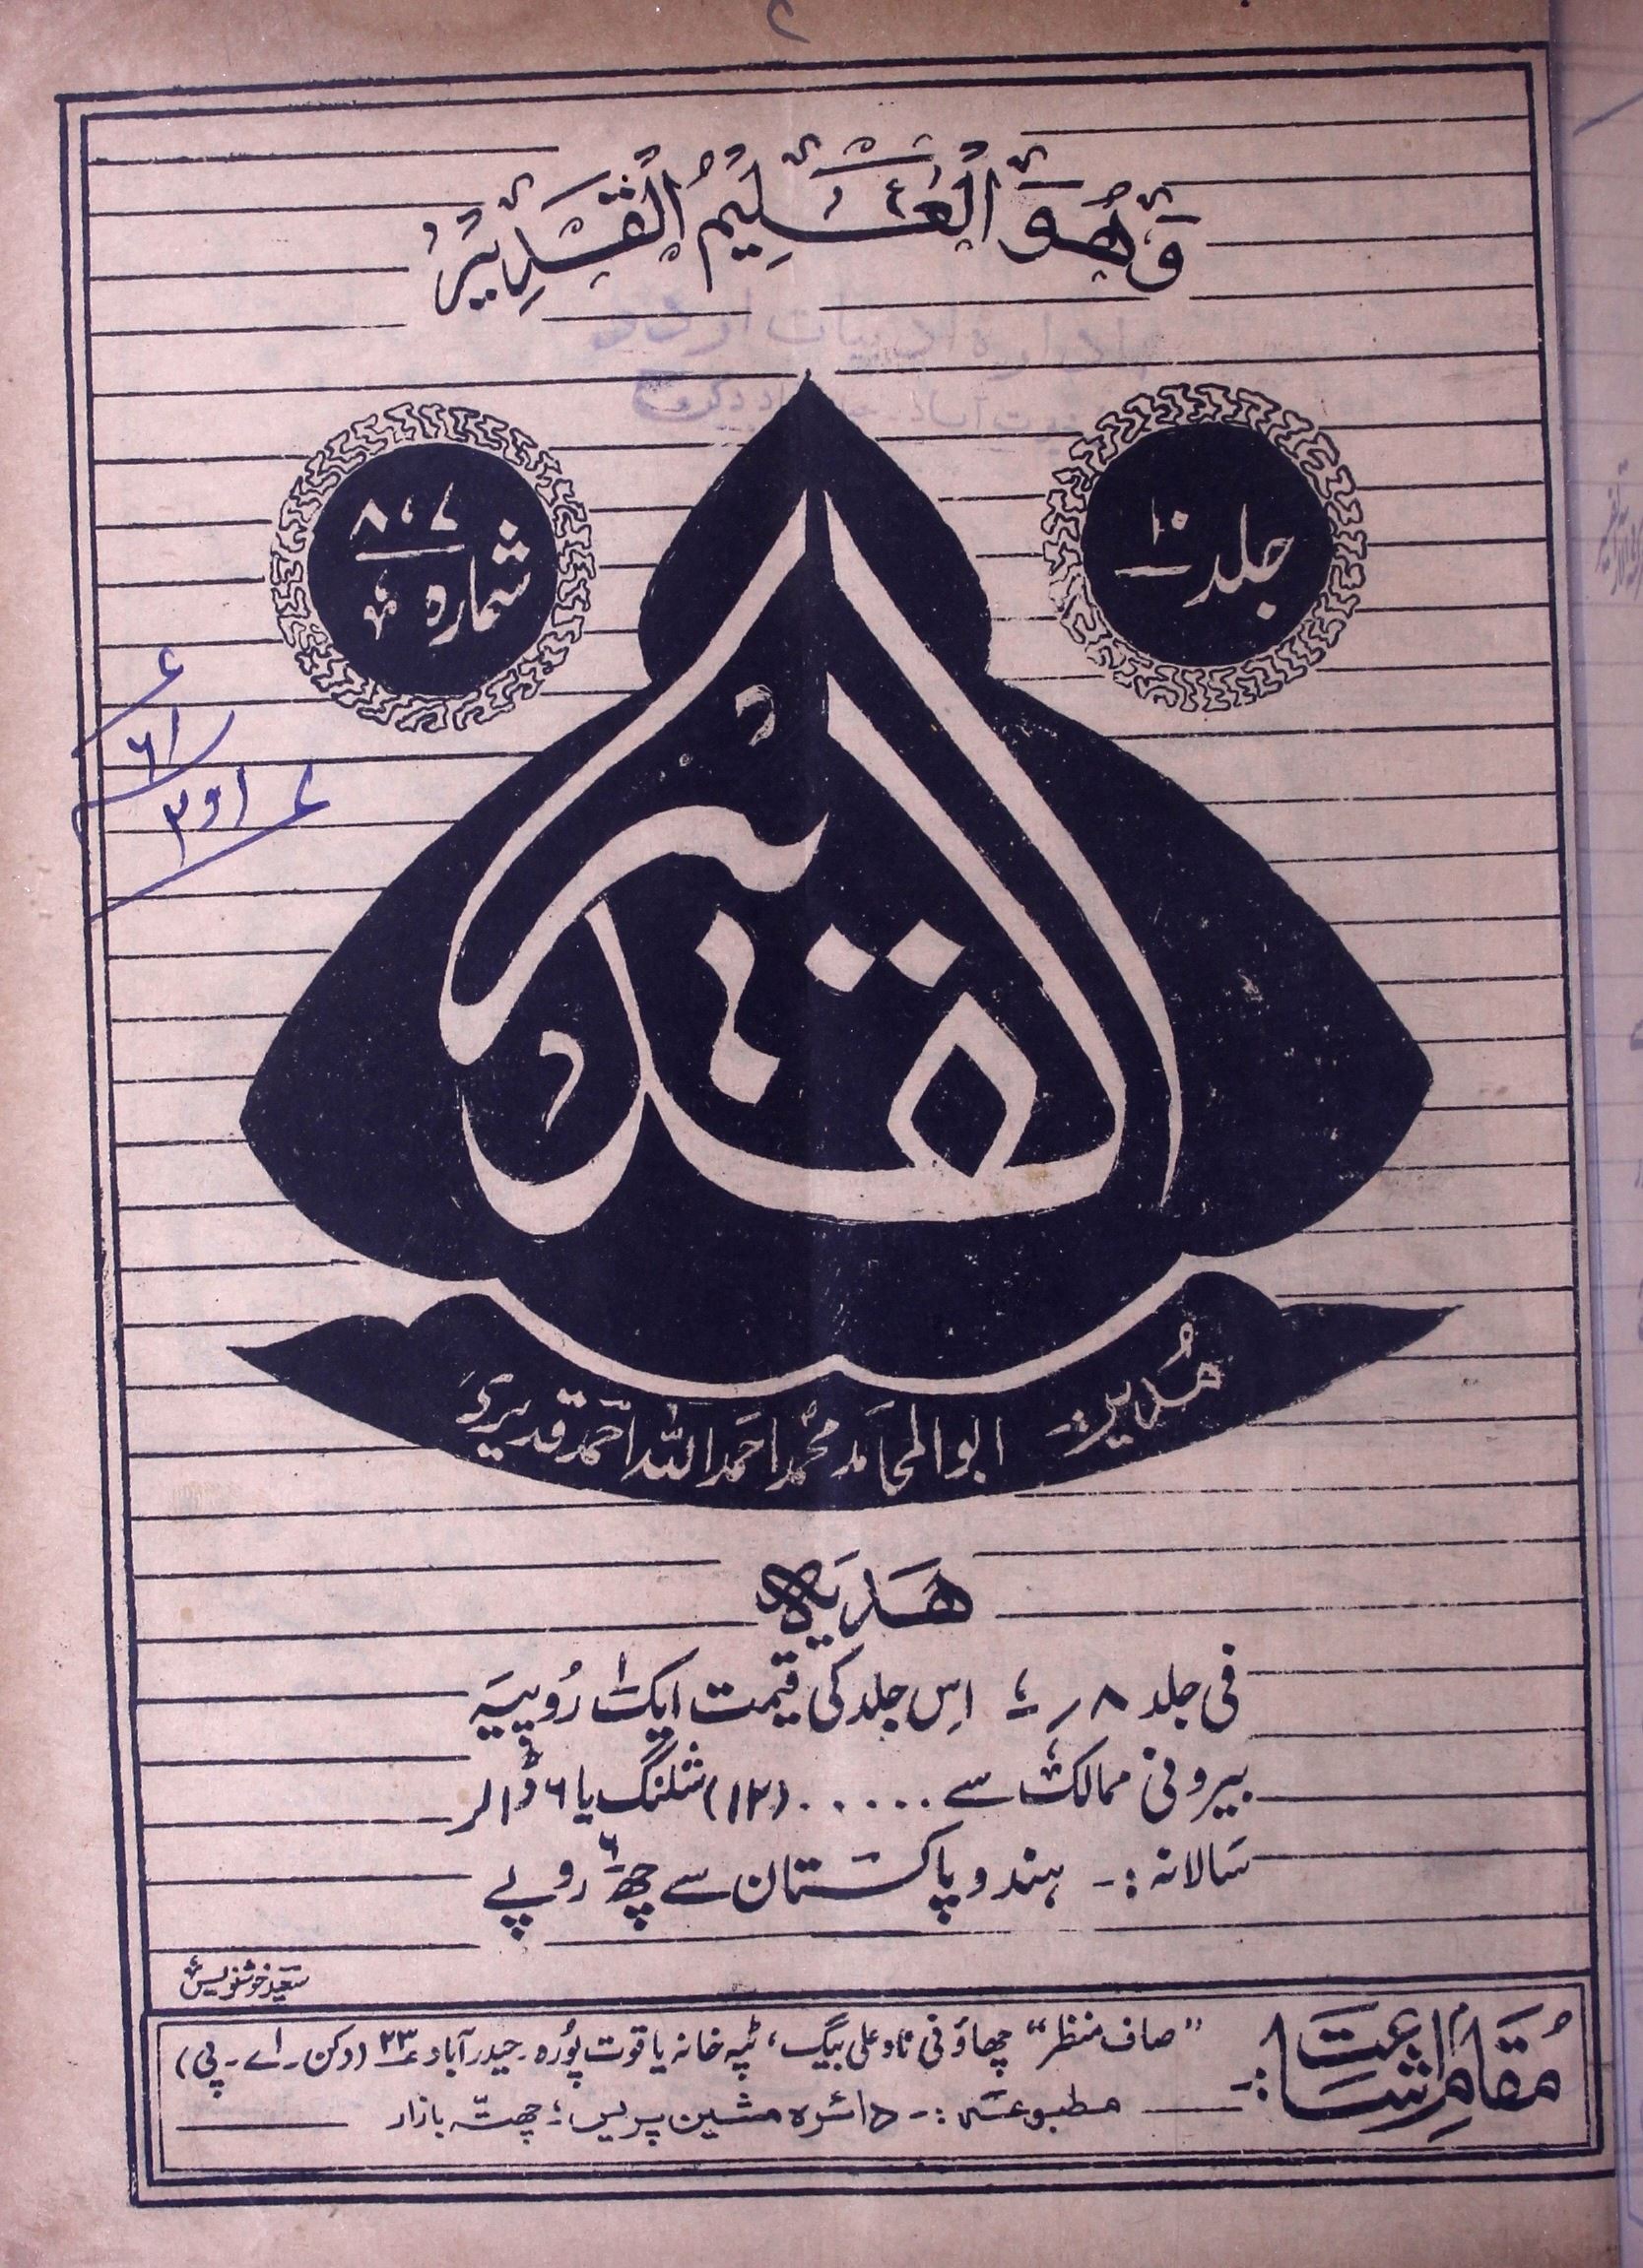 Al Qadeer Jild 10 Sh. 7-8 Jan.-Feb. 1961